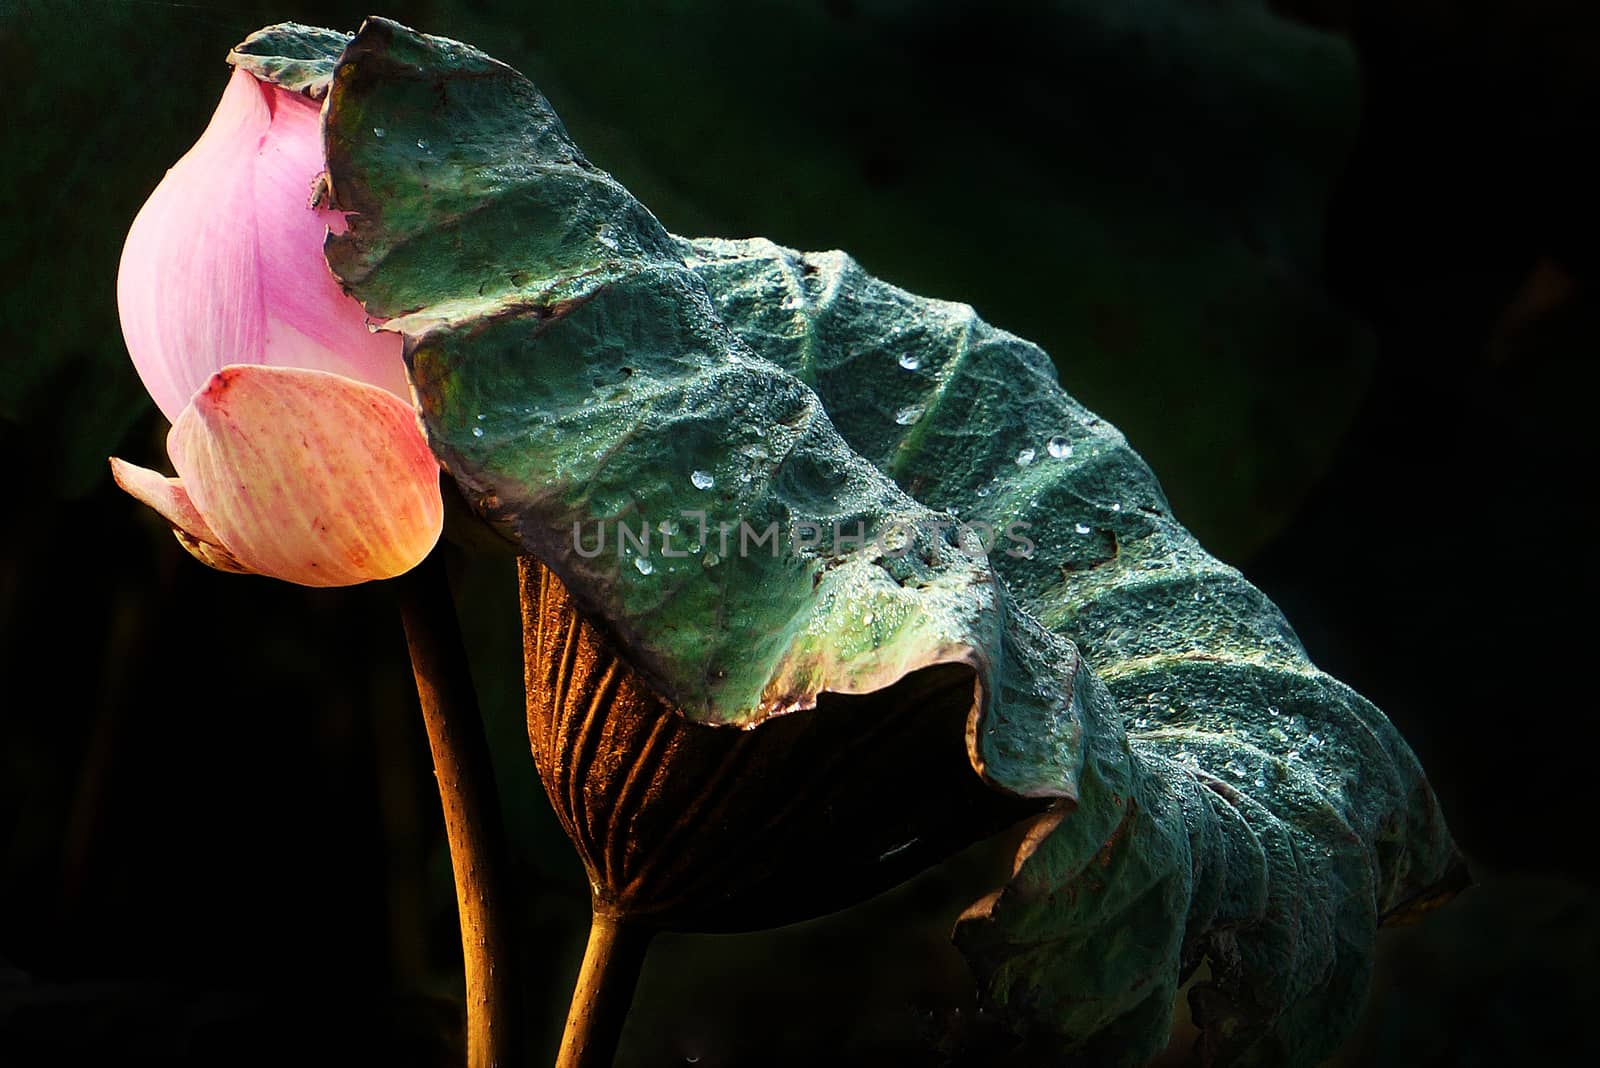 Abstract of lotus leaf protect lotus flower, flower bud in spring, dew drop on leaf, lotus is pure symbol of Vietnamese, harmony art on black background